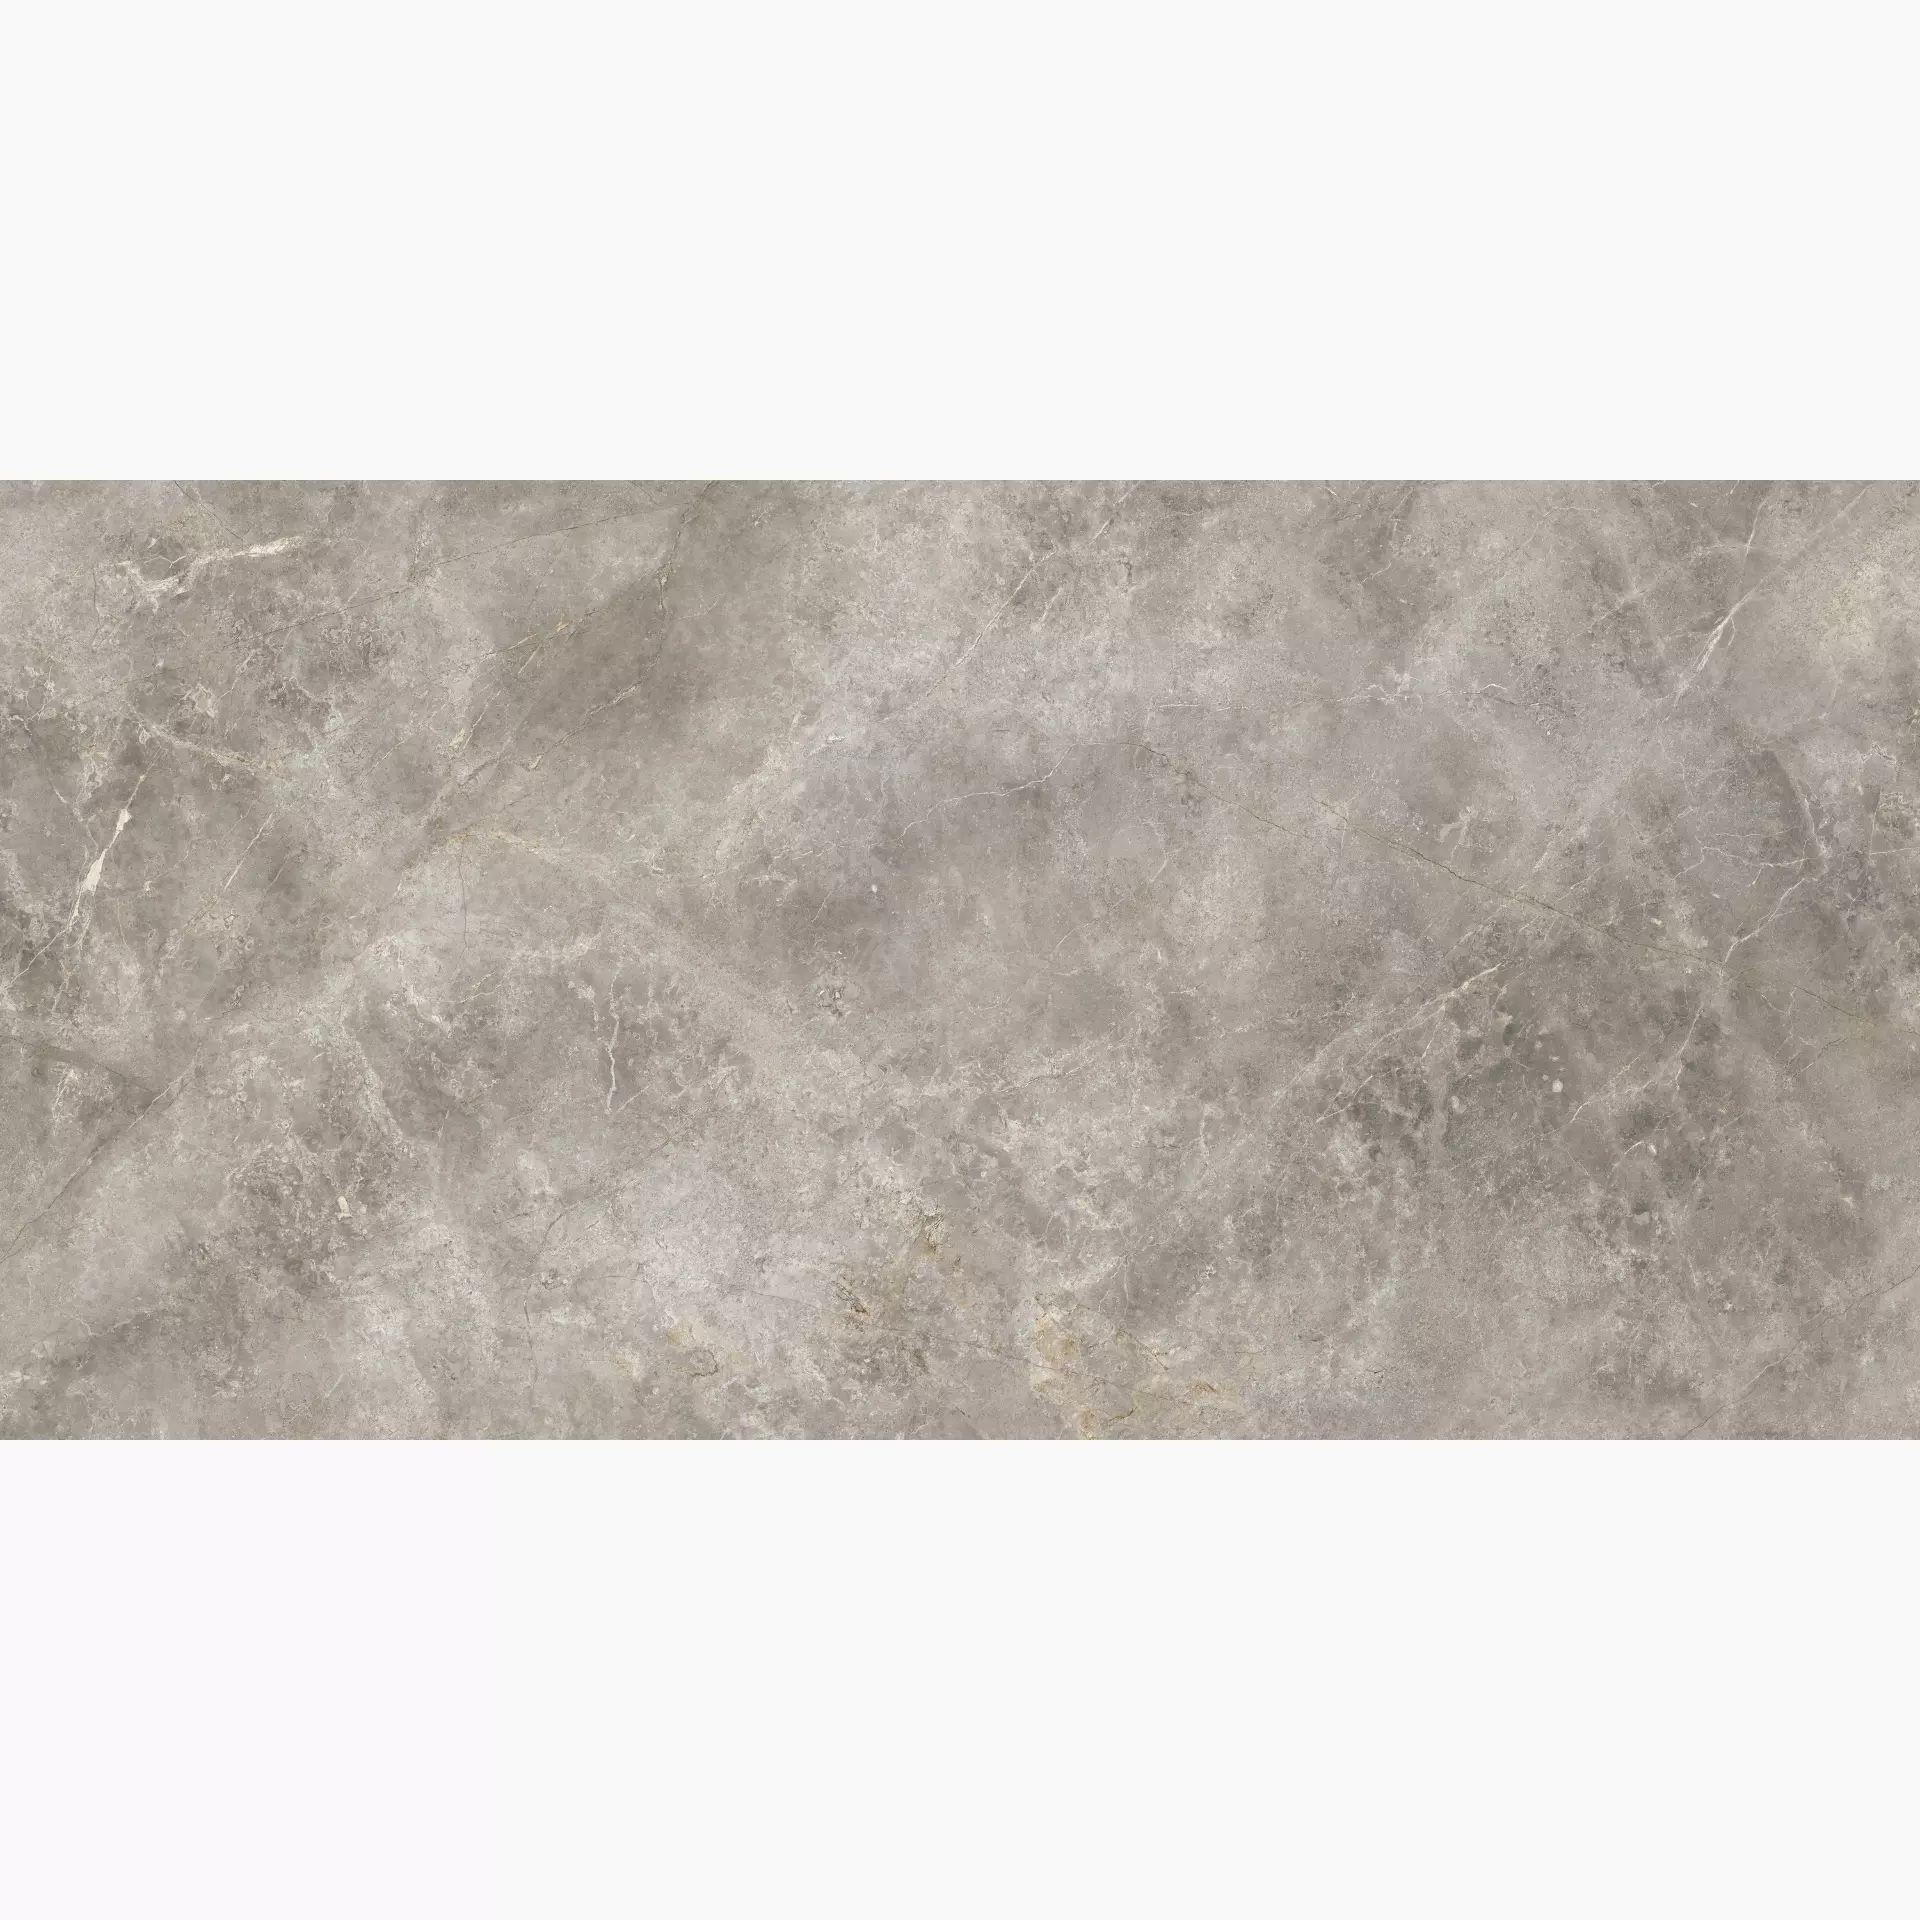 Ariostea Ultra Marmi Fior Di Bosco Lucidato Shiny UM6L300574 150x300cm 6mm